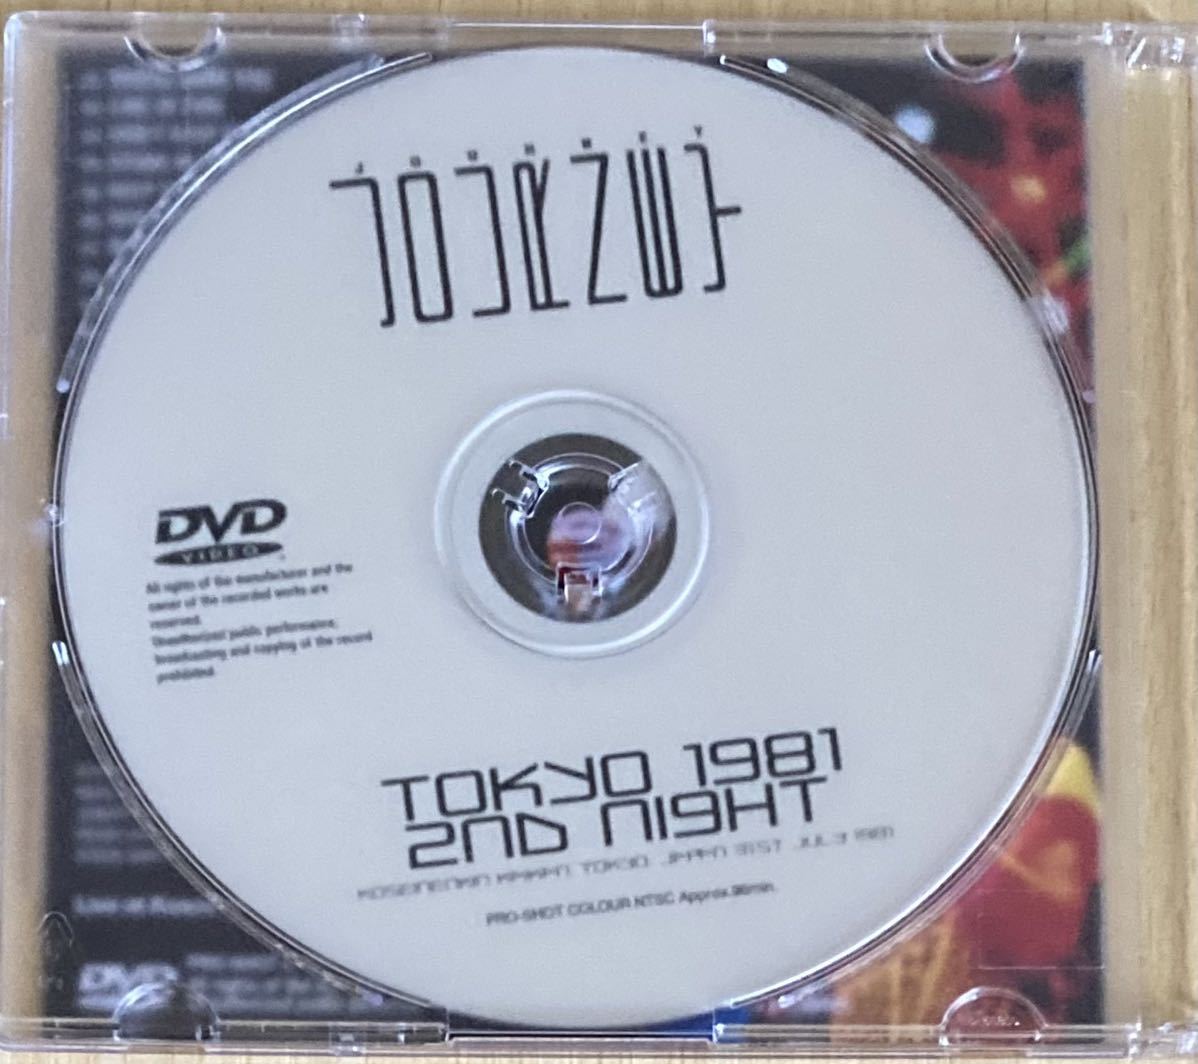 JOURNEY - TOKYO 1981 1ST NIGHT(2CD) plus Bonus DVDR_画像4